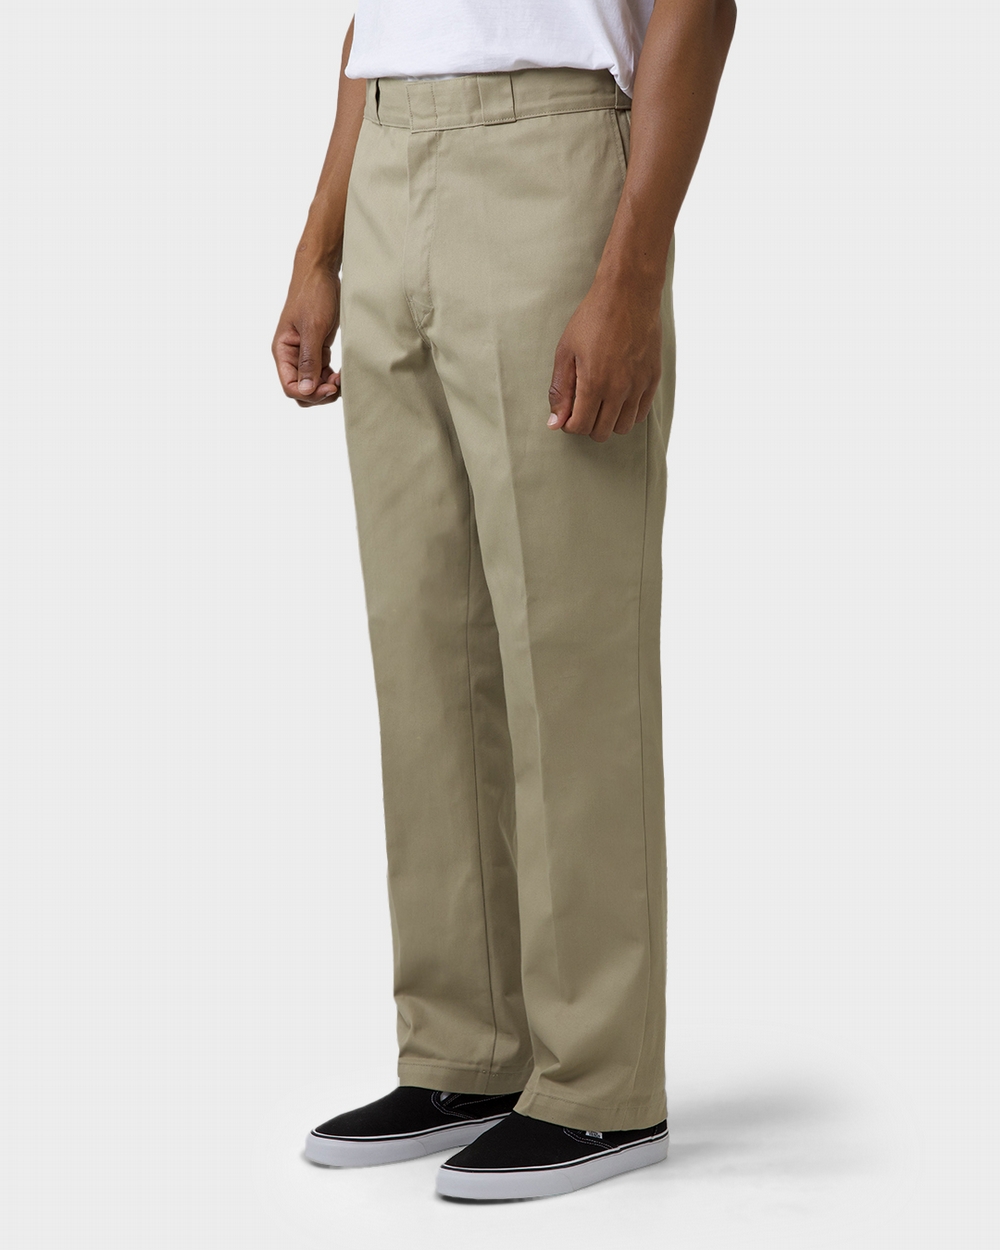 Gray/Multicolored 3-6M discount 64% KIDS FASHION Trousers Print C&A slacks 